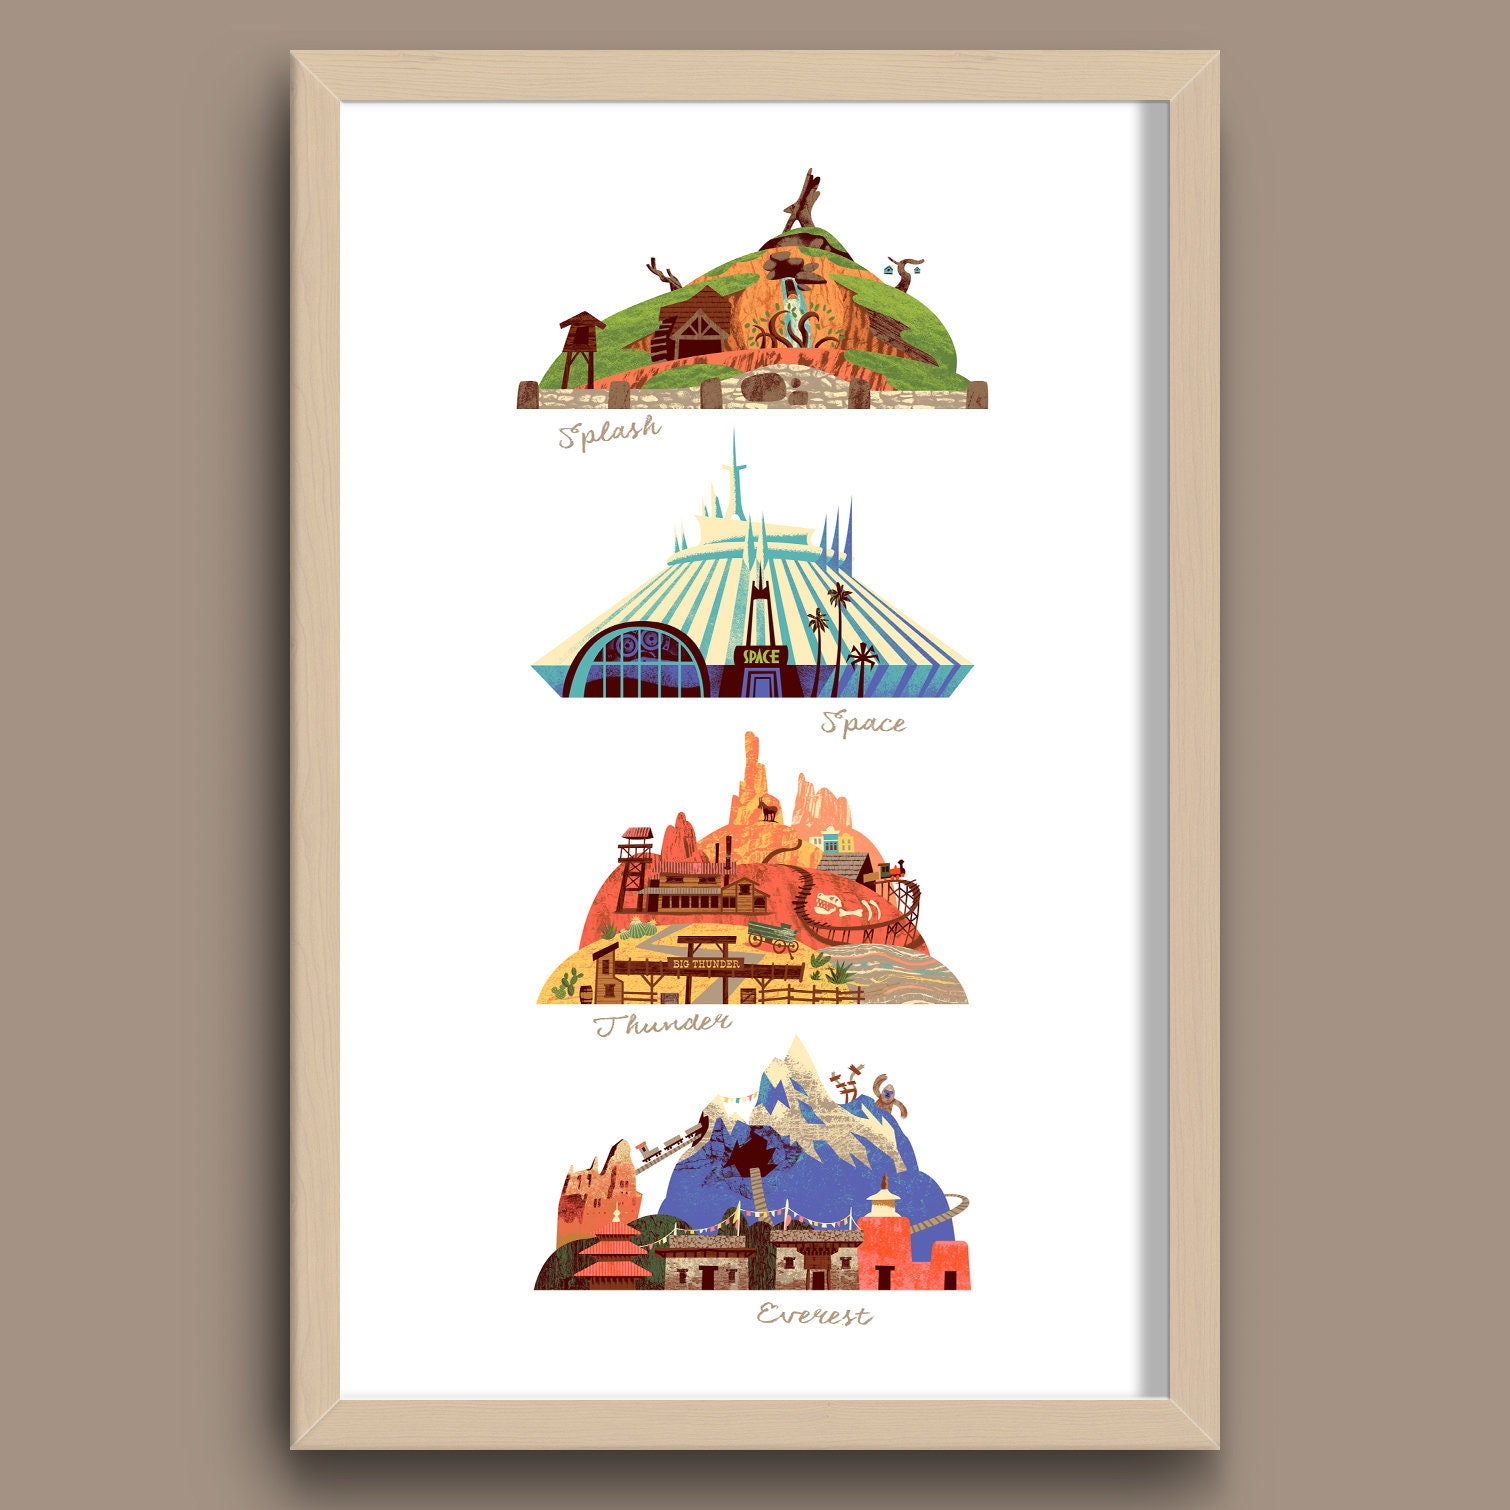 The Disney Mountains Print, Walt Disney World, Splash, Space, Big